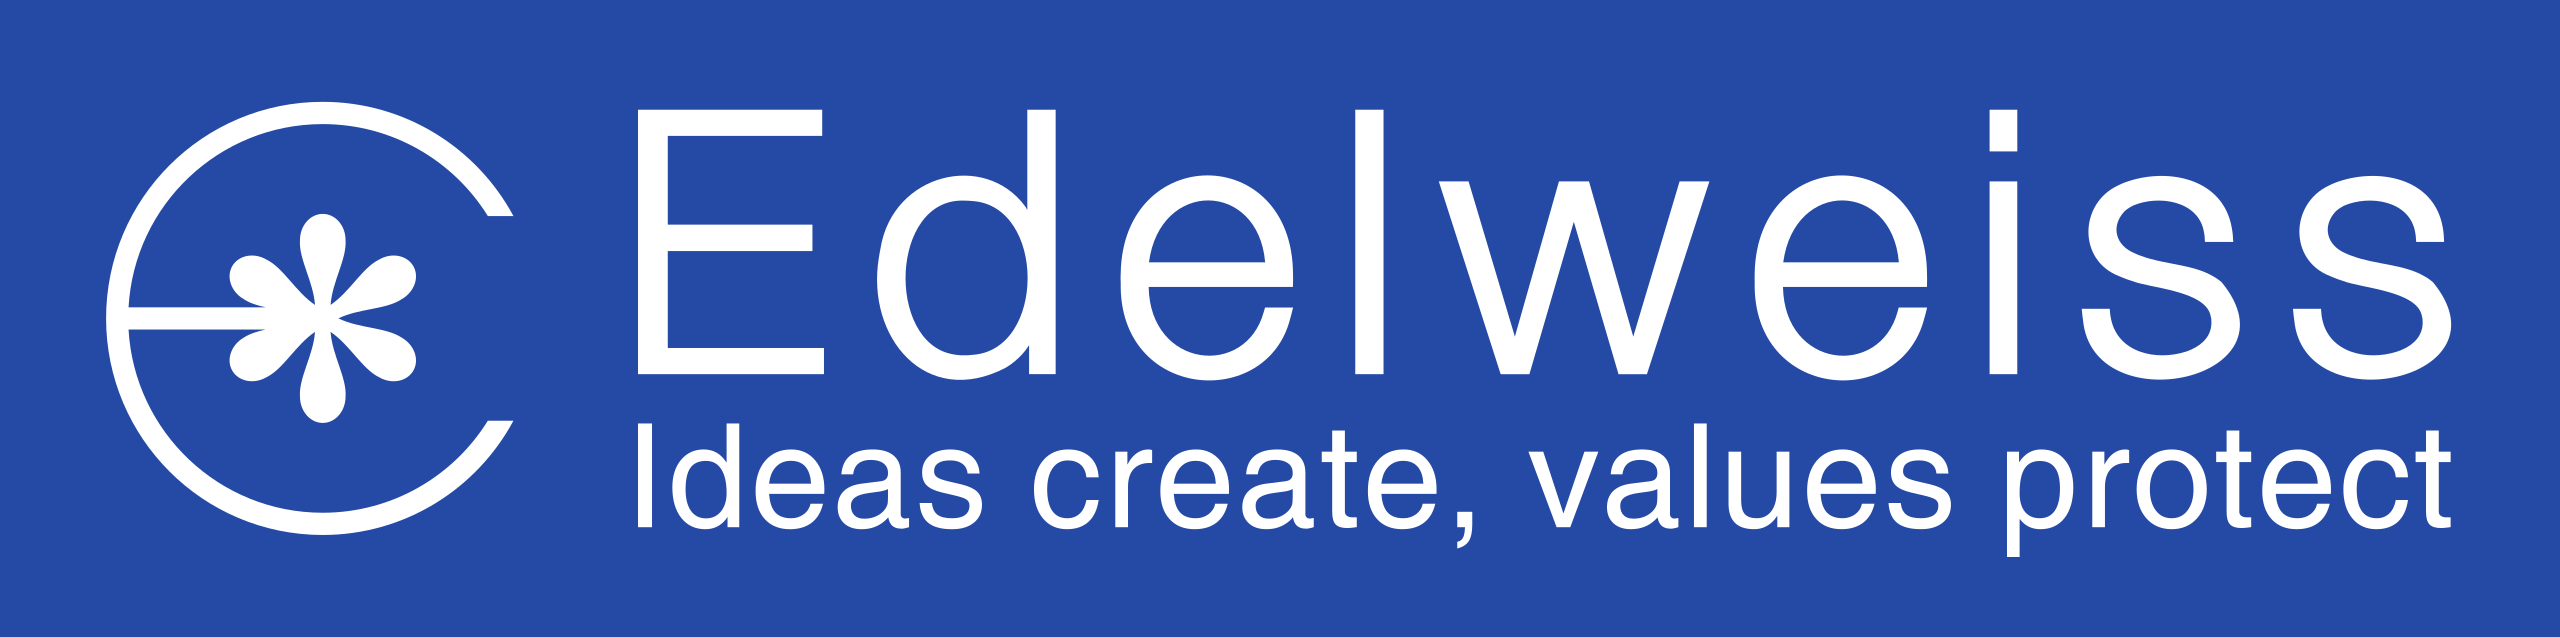 WWII Bergführer Sleeve Edelweiss - VISION WORLD TECH PVT LTD